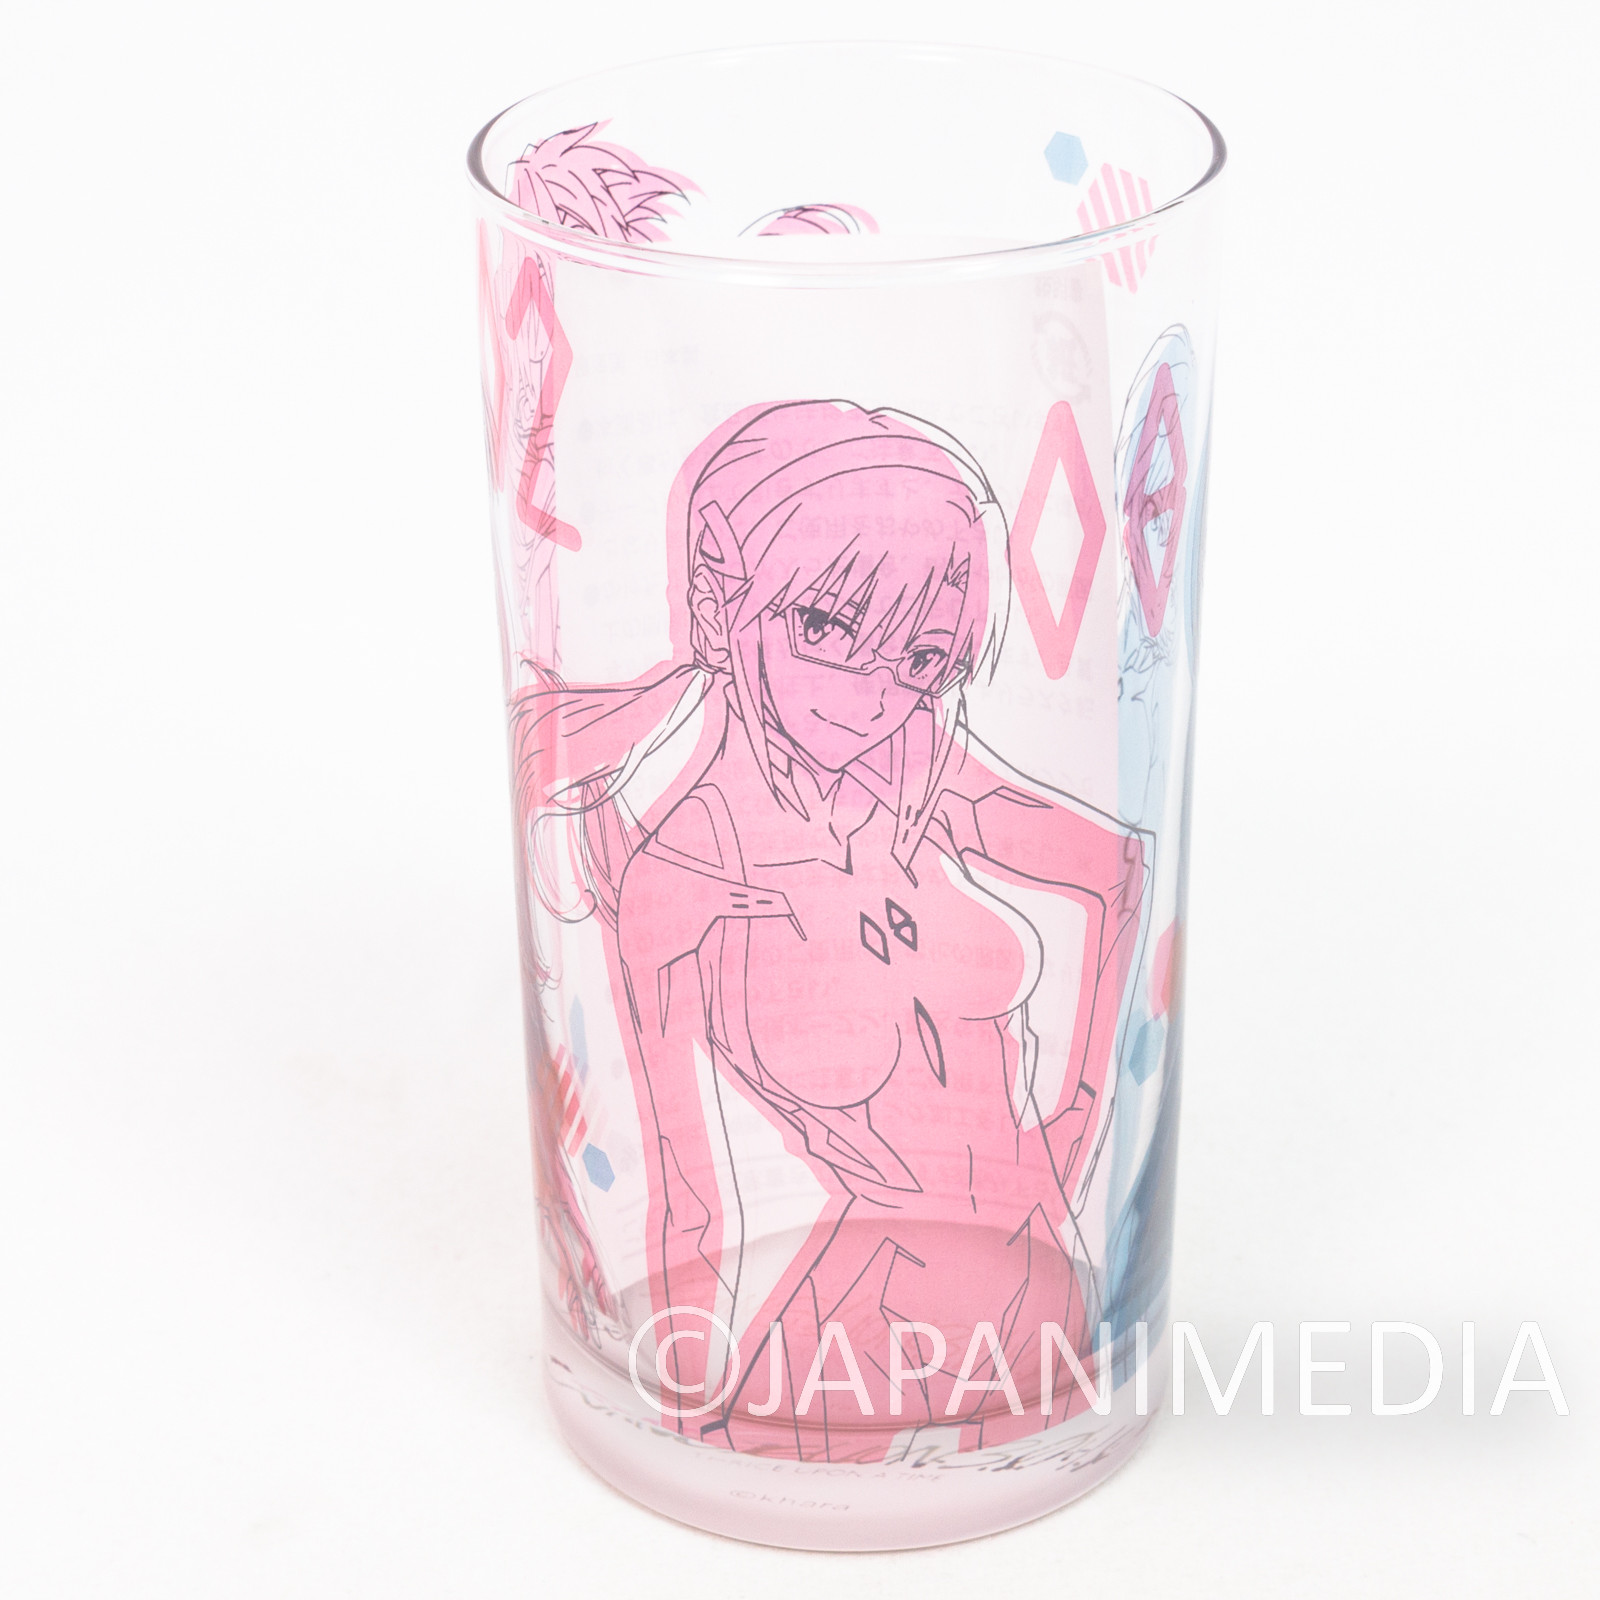 Evangelion: 3.0+1.0 Evangelion Store Glass [Rei Ayanami / Asuka Langley / Mari Illustrious] JAPAN